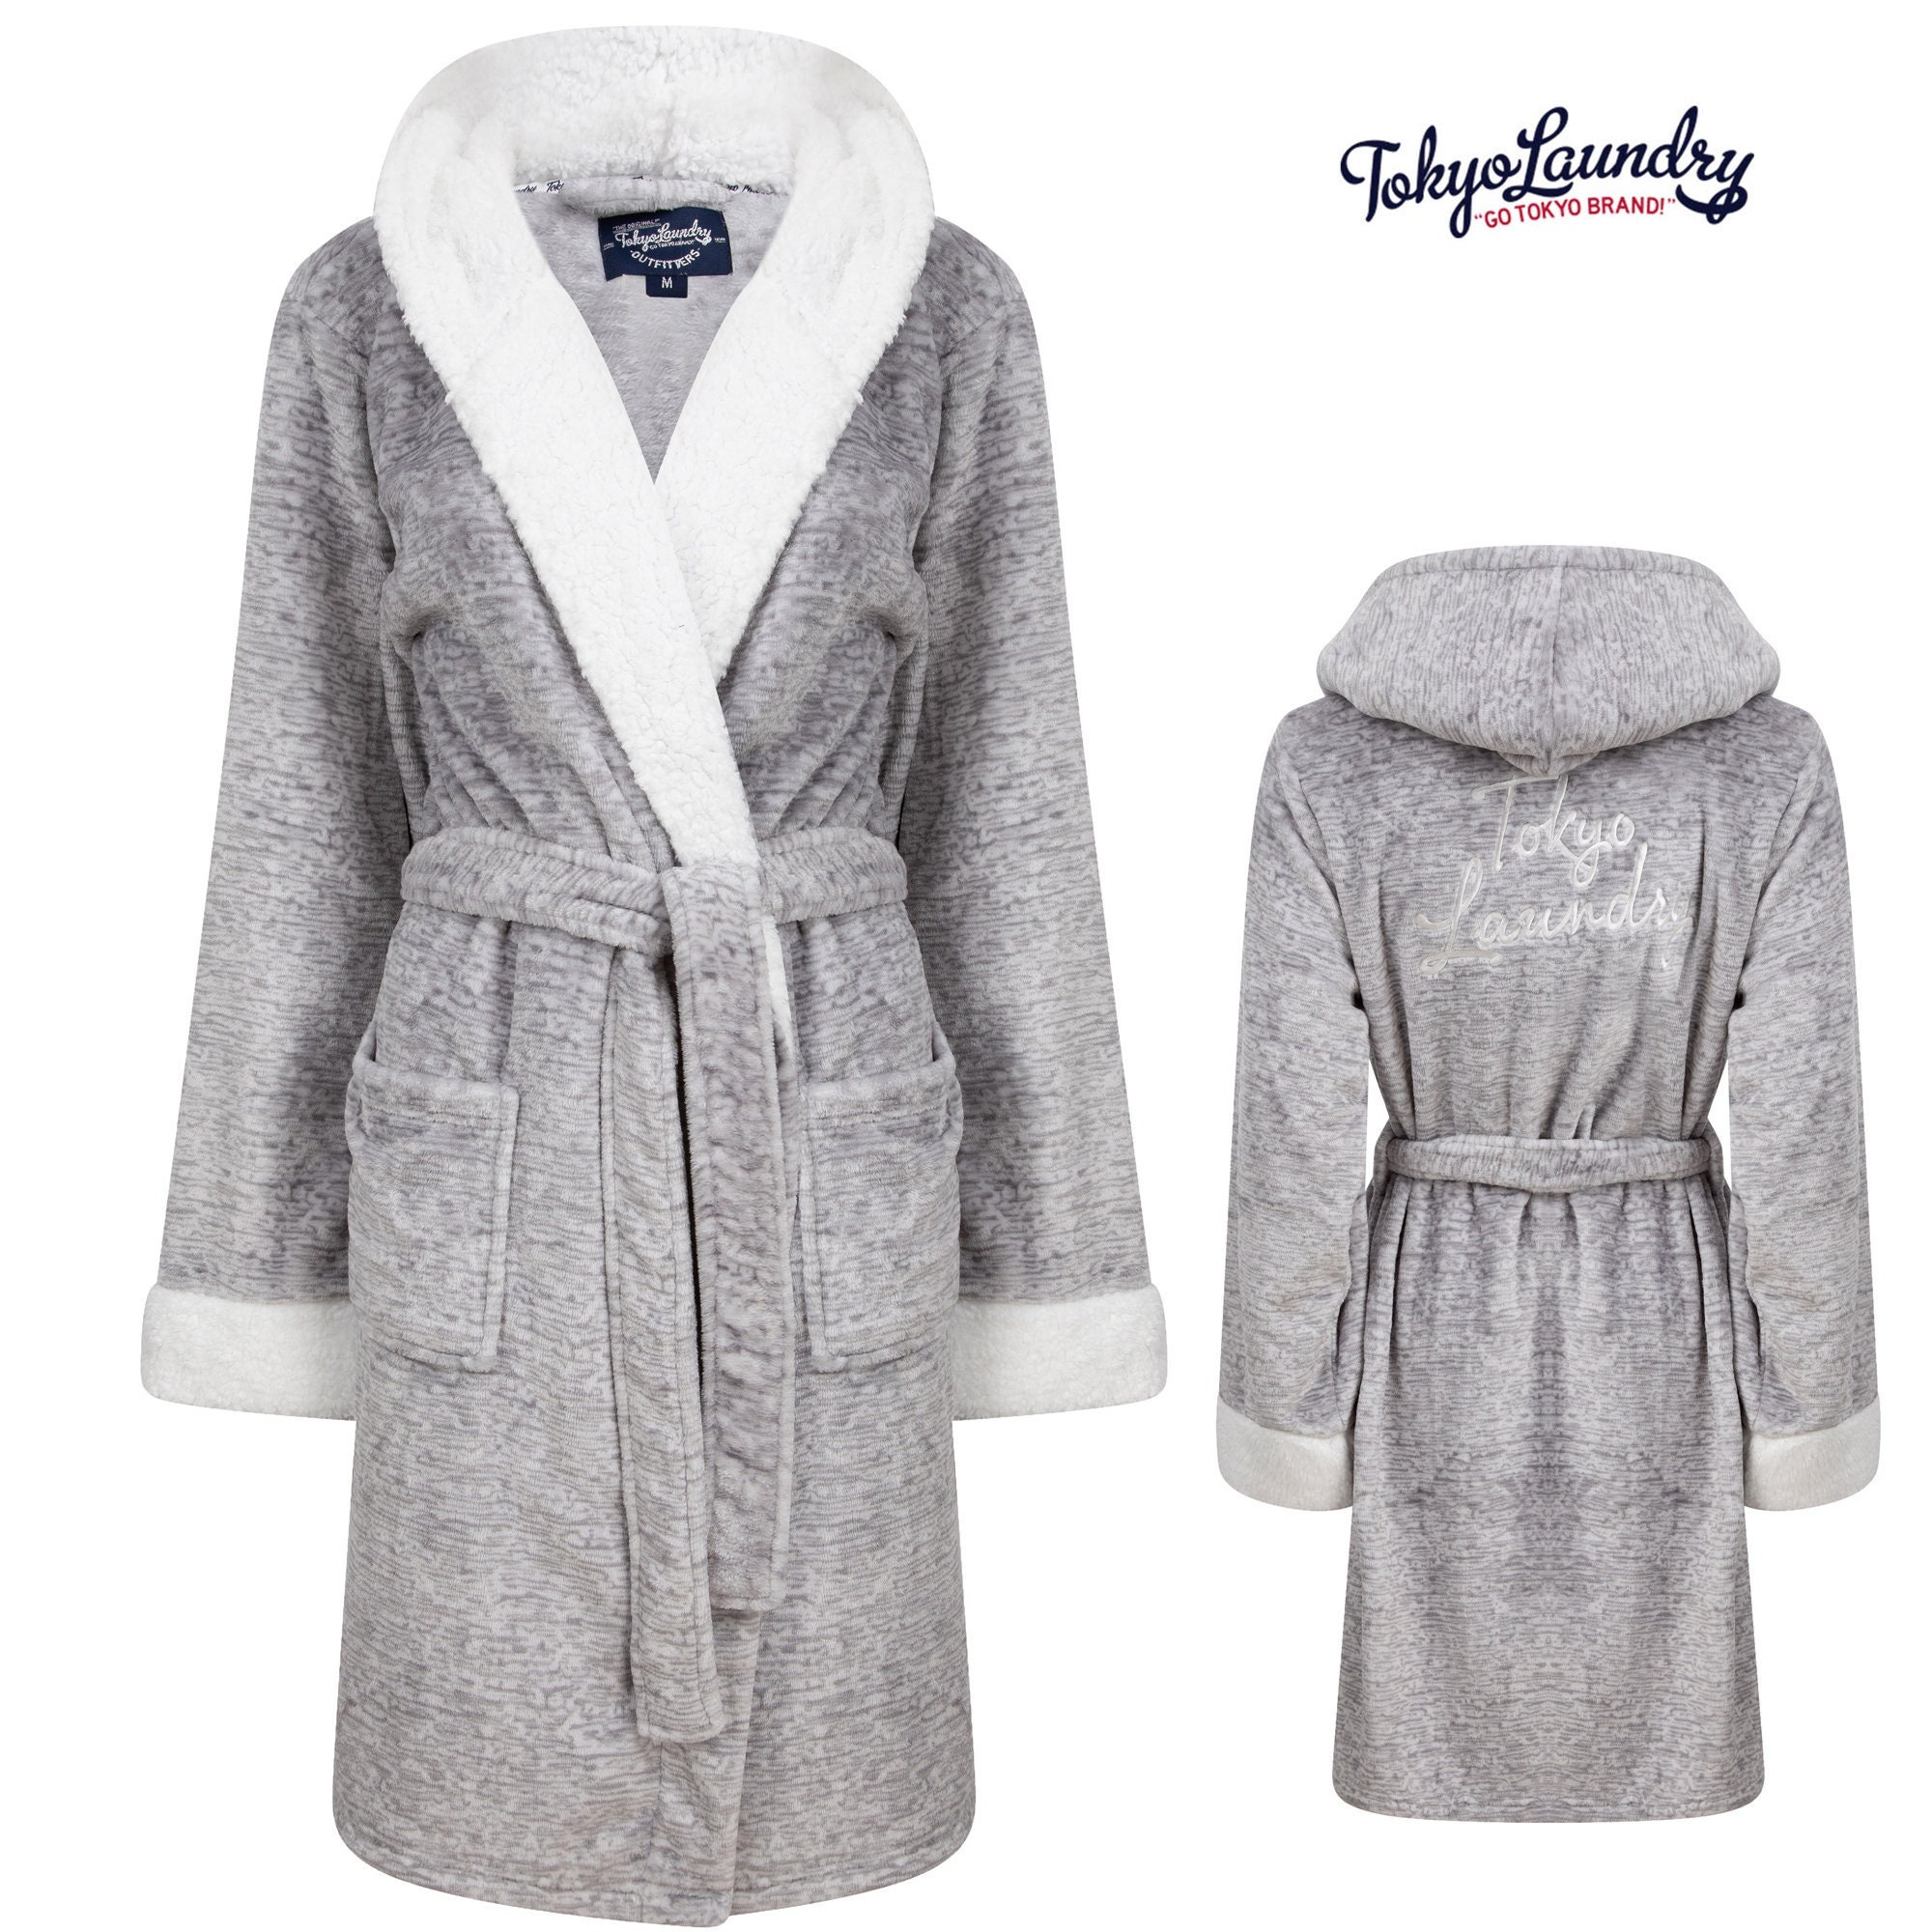 Women's Winter Fleece Robe, Wrap-Front | Robes at L.L.Bean